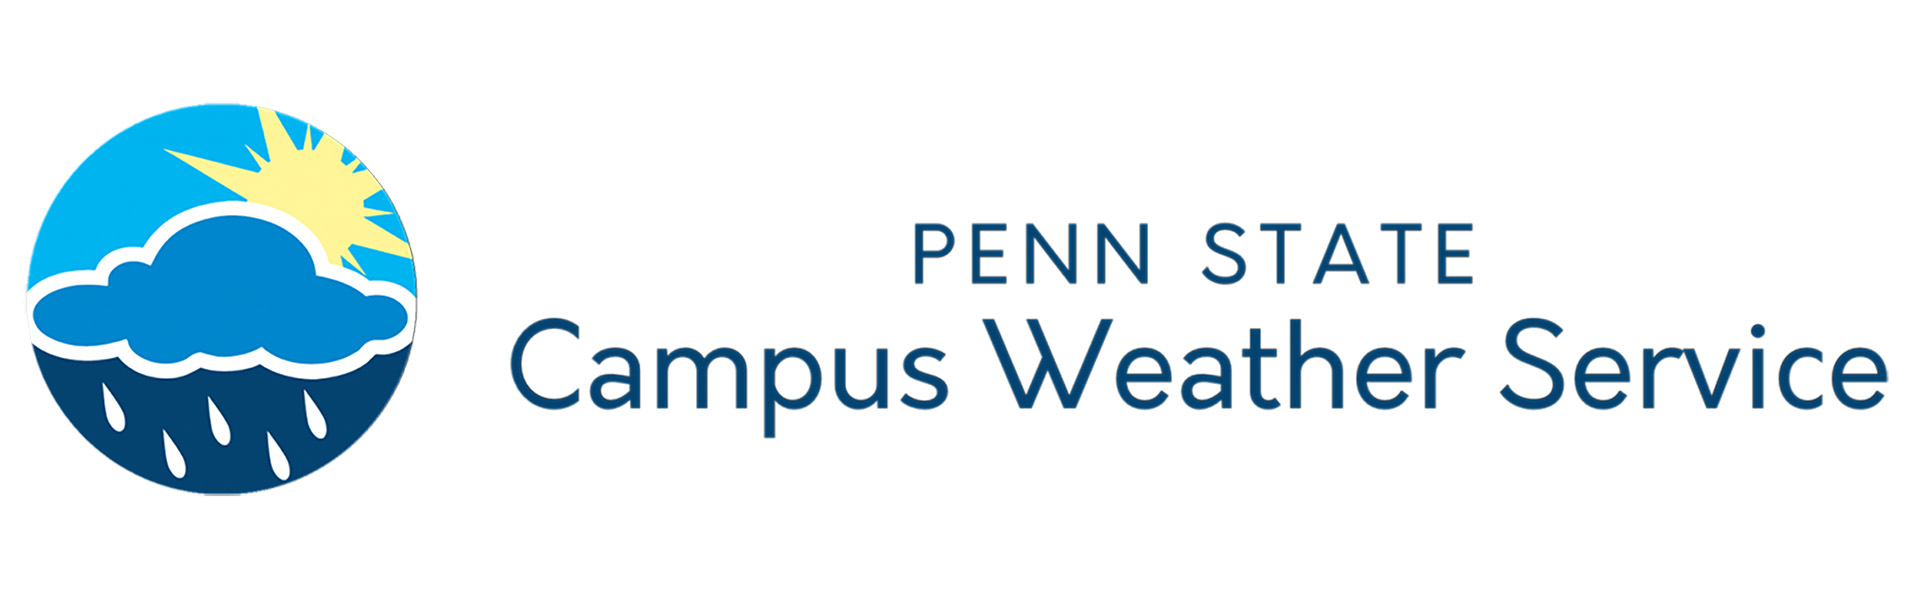 Campus Weather Service